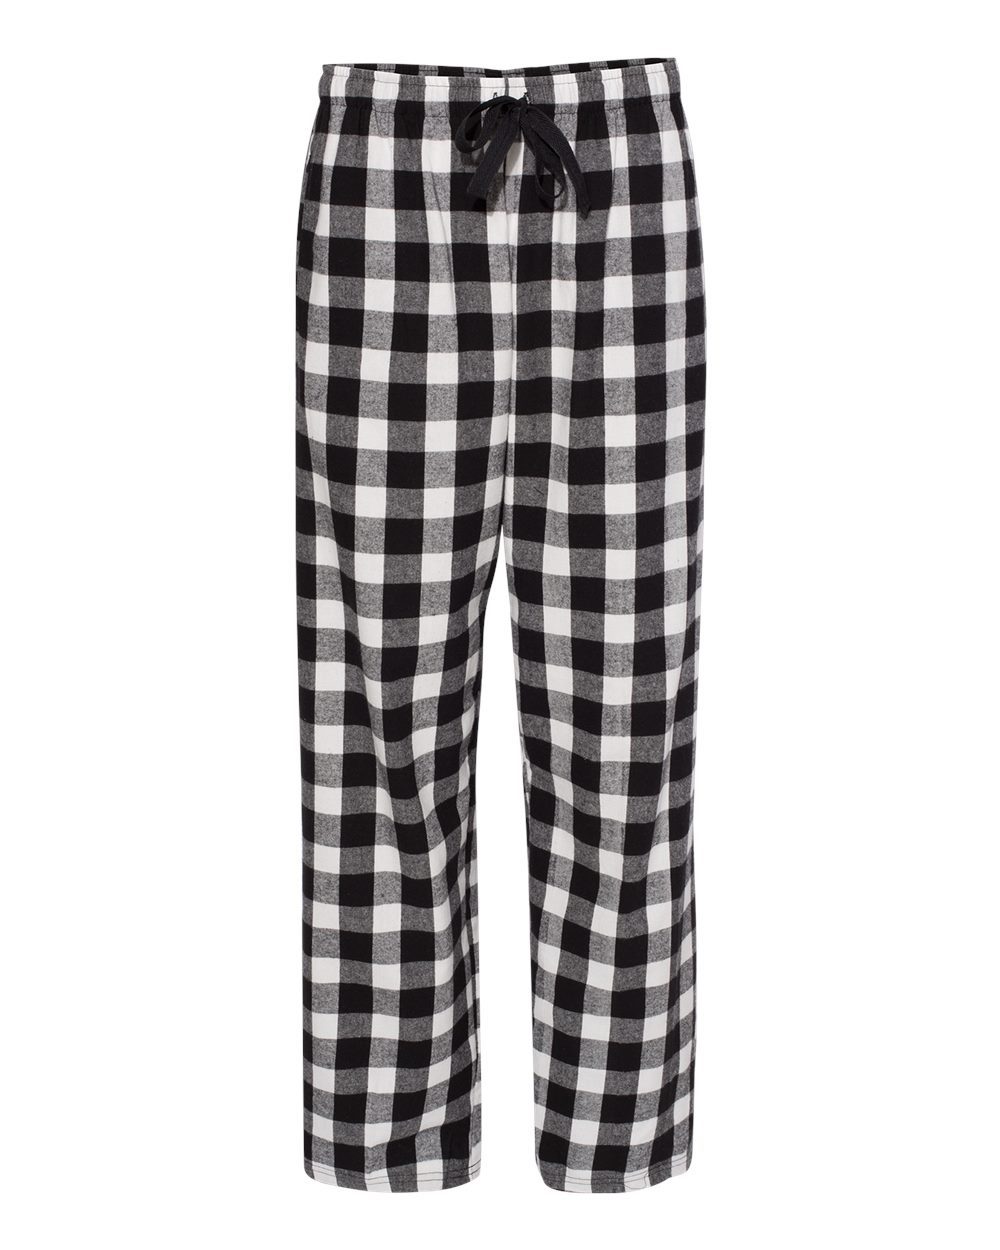 Boxercraft Fashion Cotton Flannel Pants Pockets F20 S-2XL UNISEX PJ Pajama Pant 